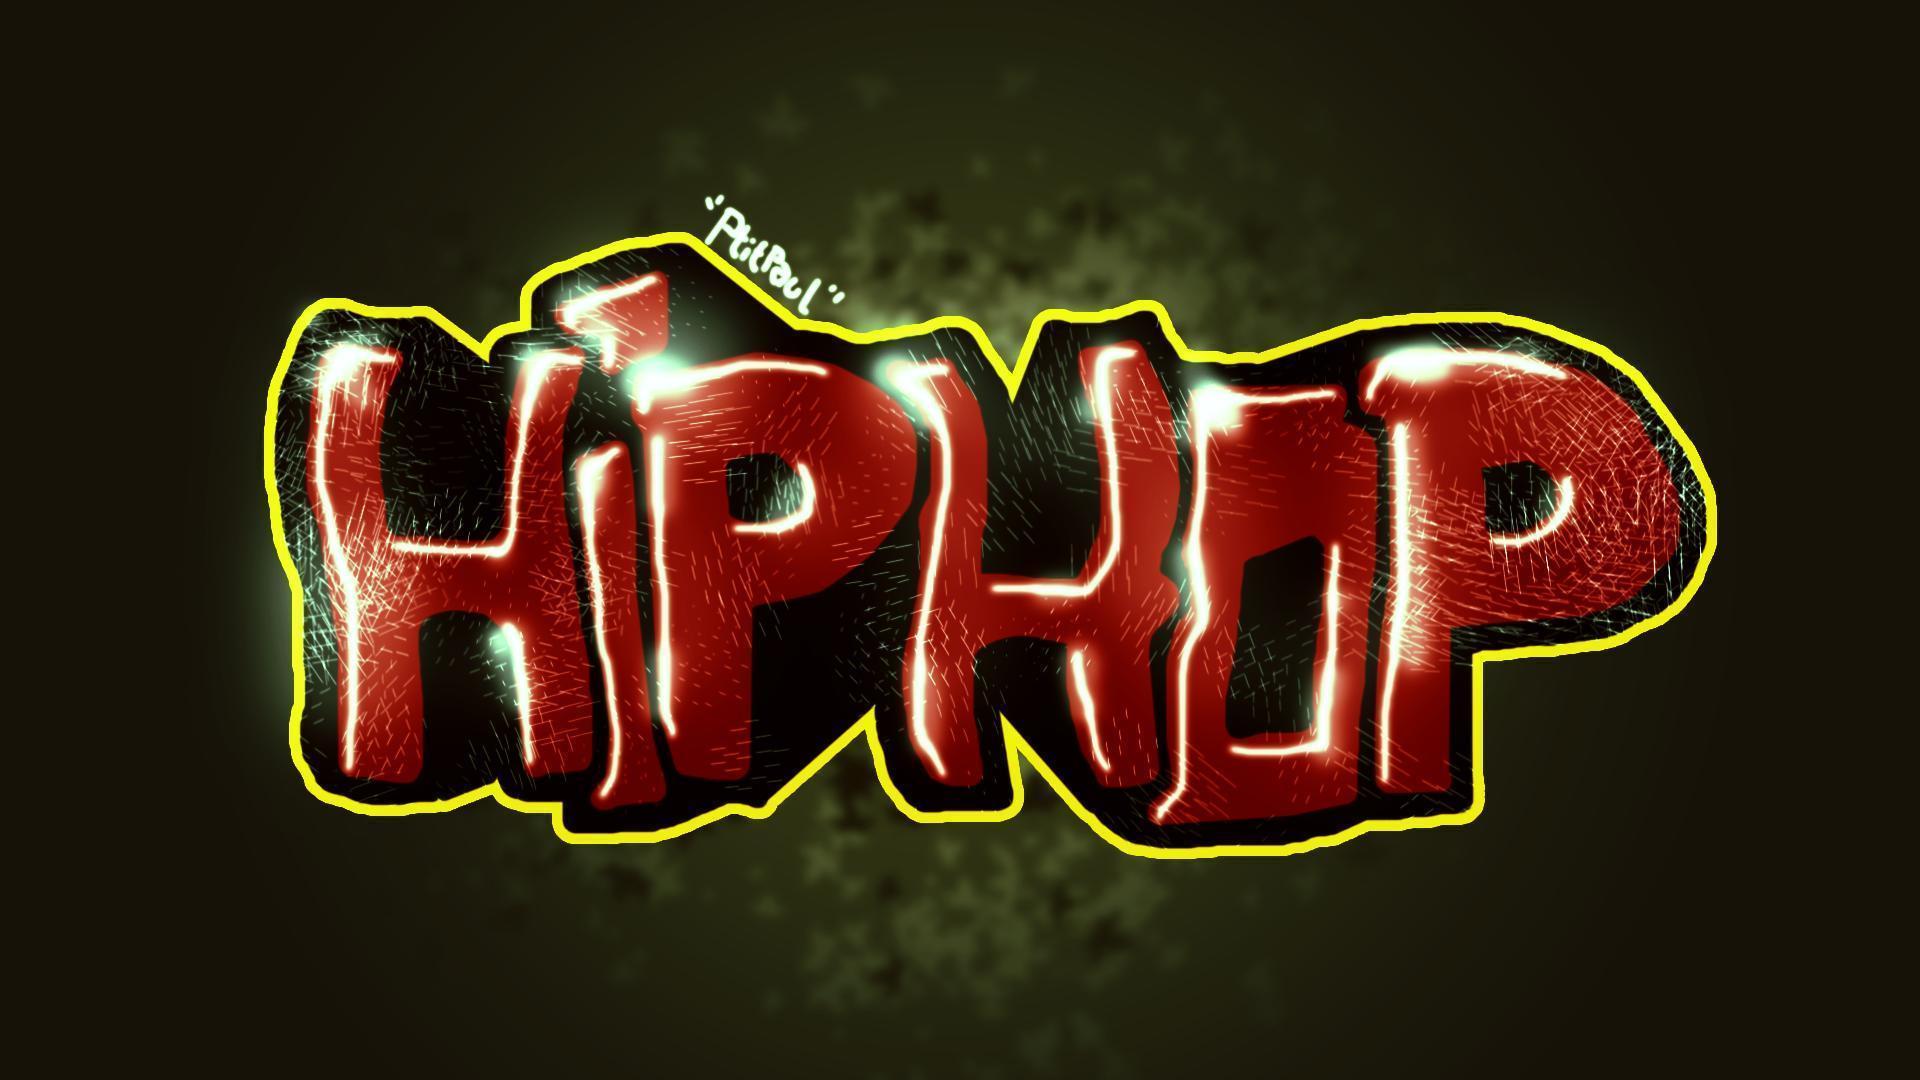 HipHop Graffiti By PtitPaulDesign On DeviantART. Part of Street